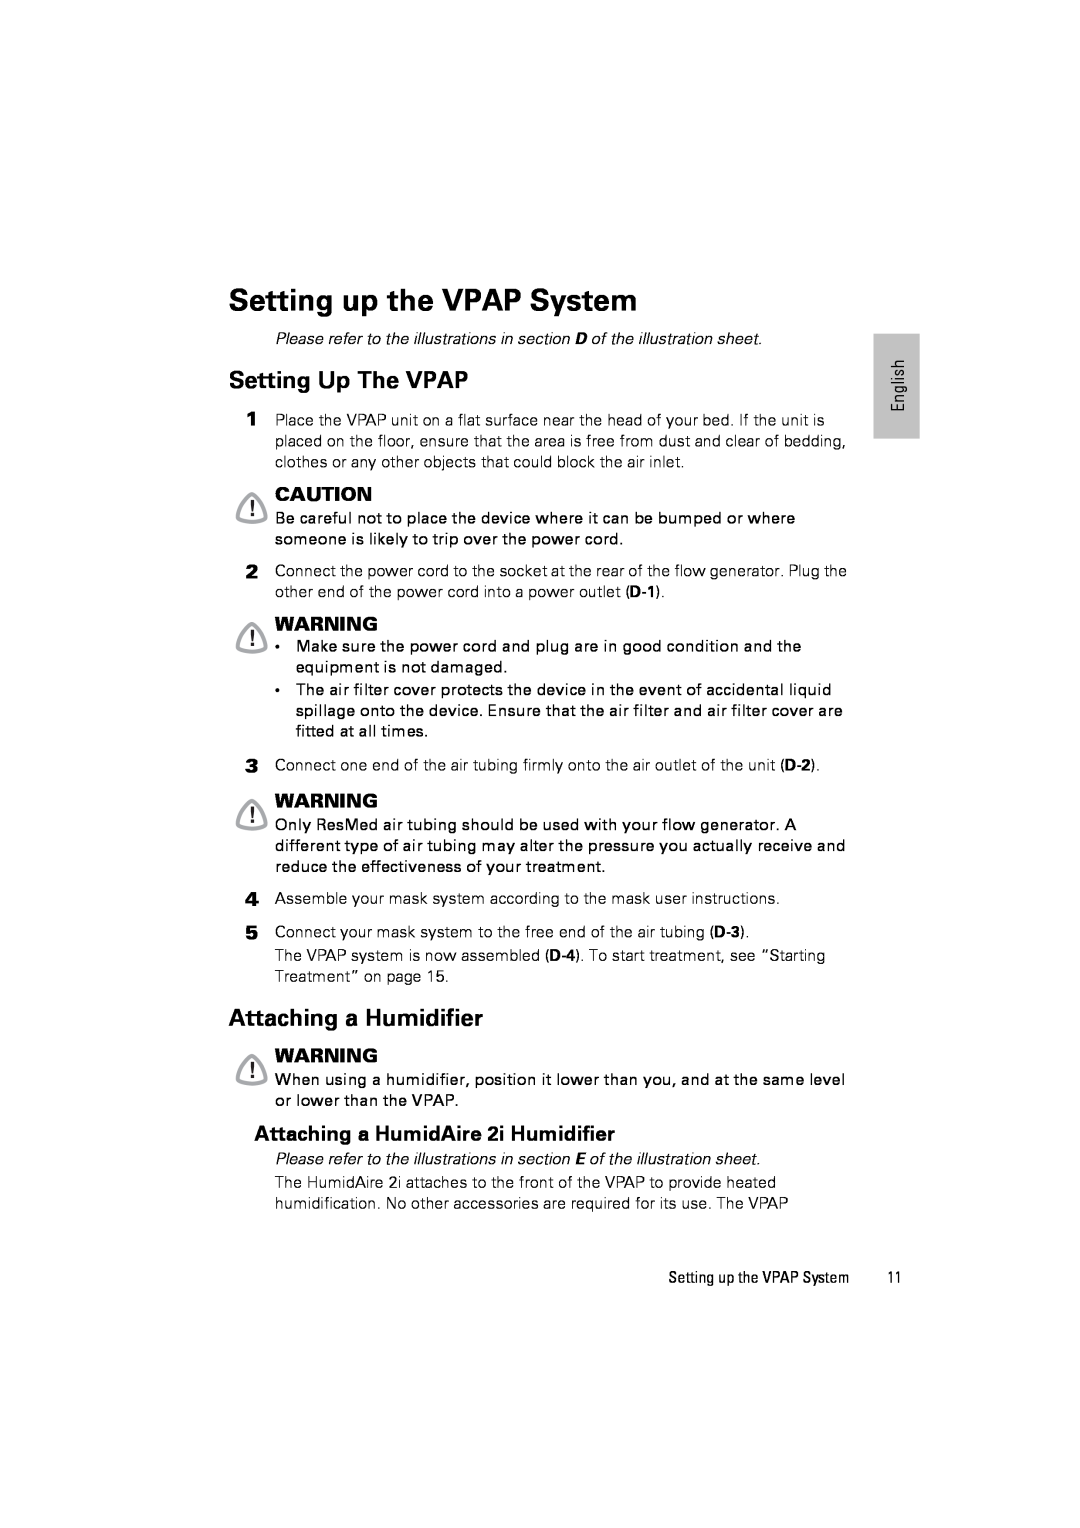 ResMed III & III ST user manual Setting up the VPAP System, Setting Up The VPAP, Attaching a Humidifier 